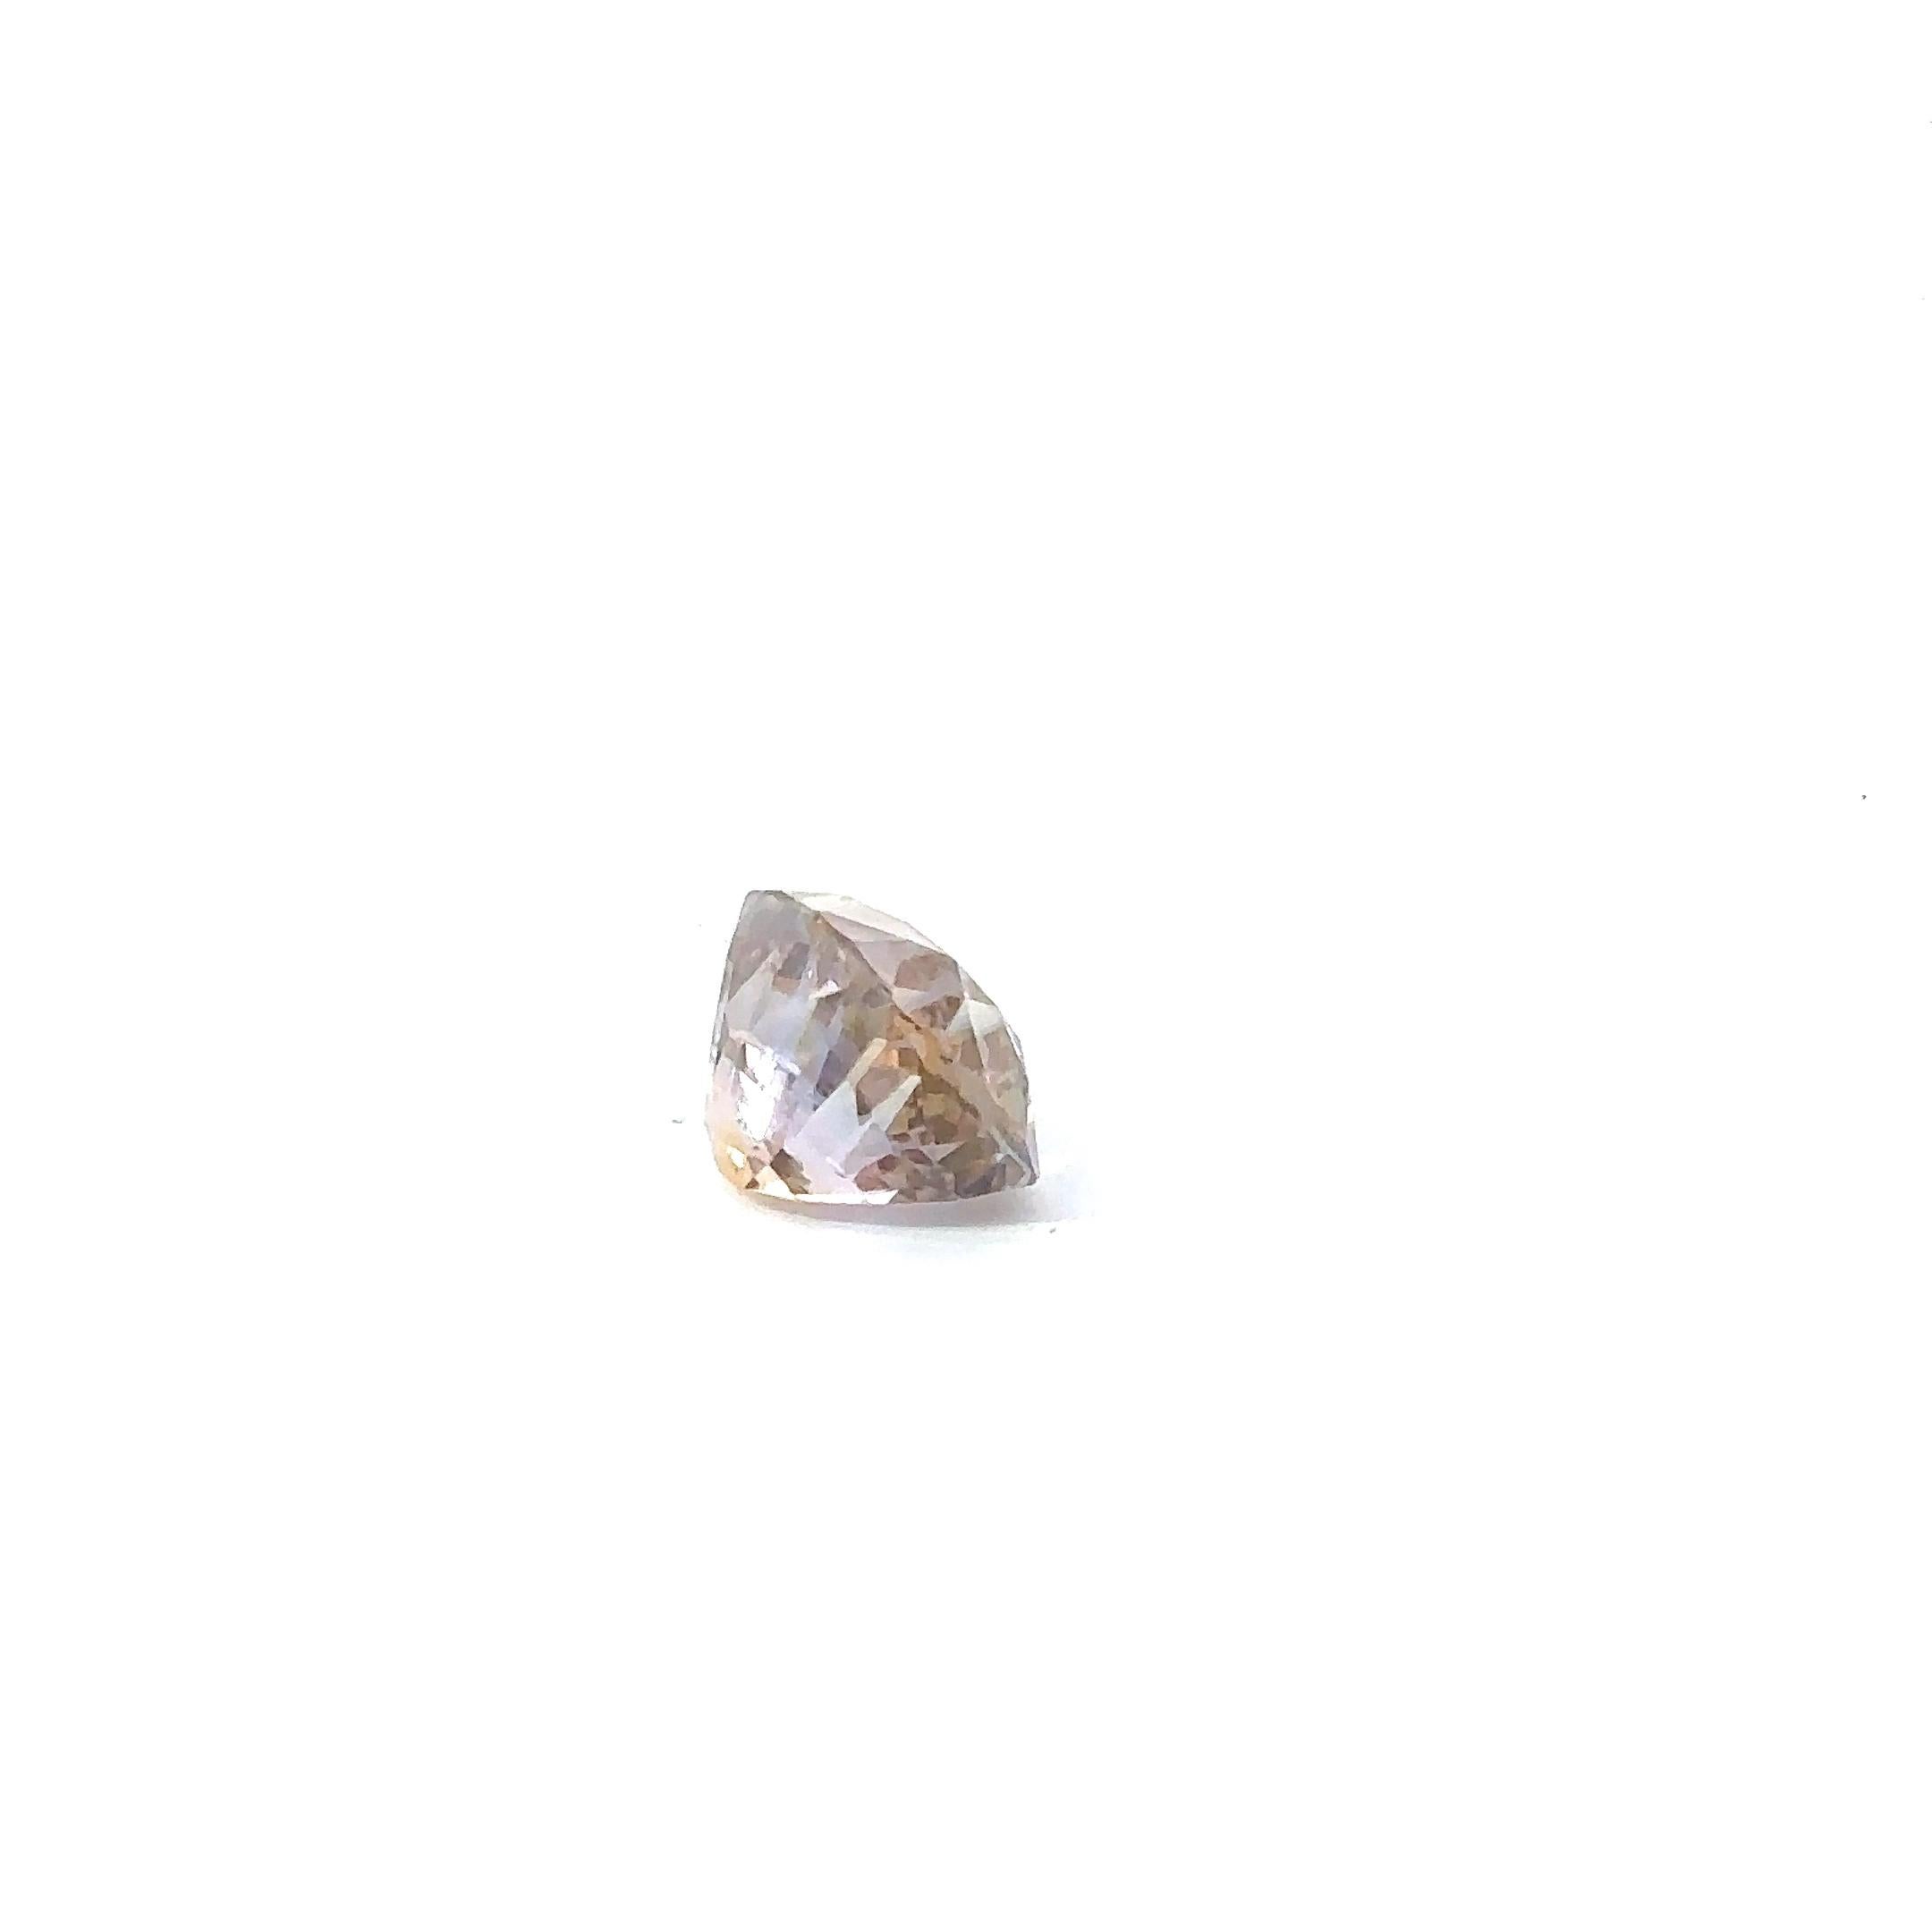 Artisan Saphir chauffé de 6,16 carats certifié GIA (jaune orangé) en vente